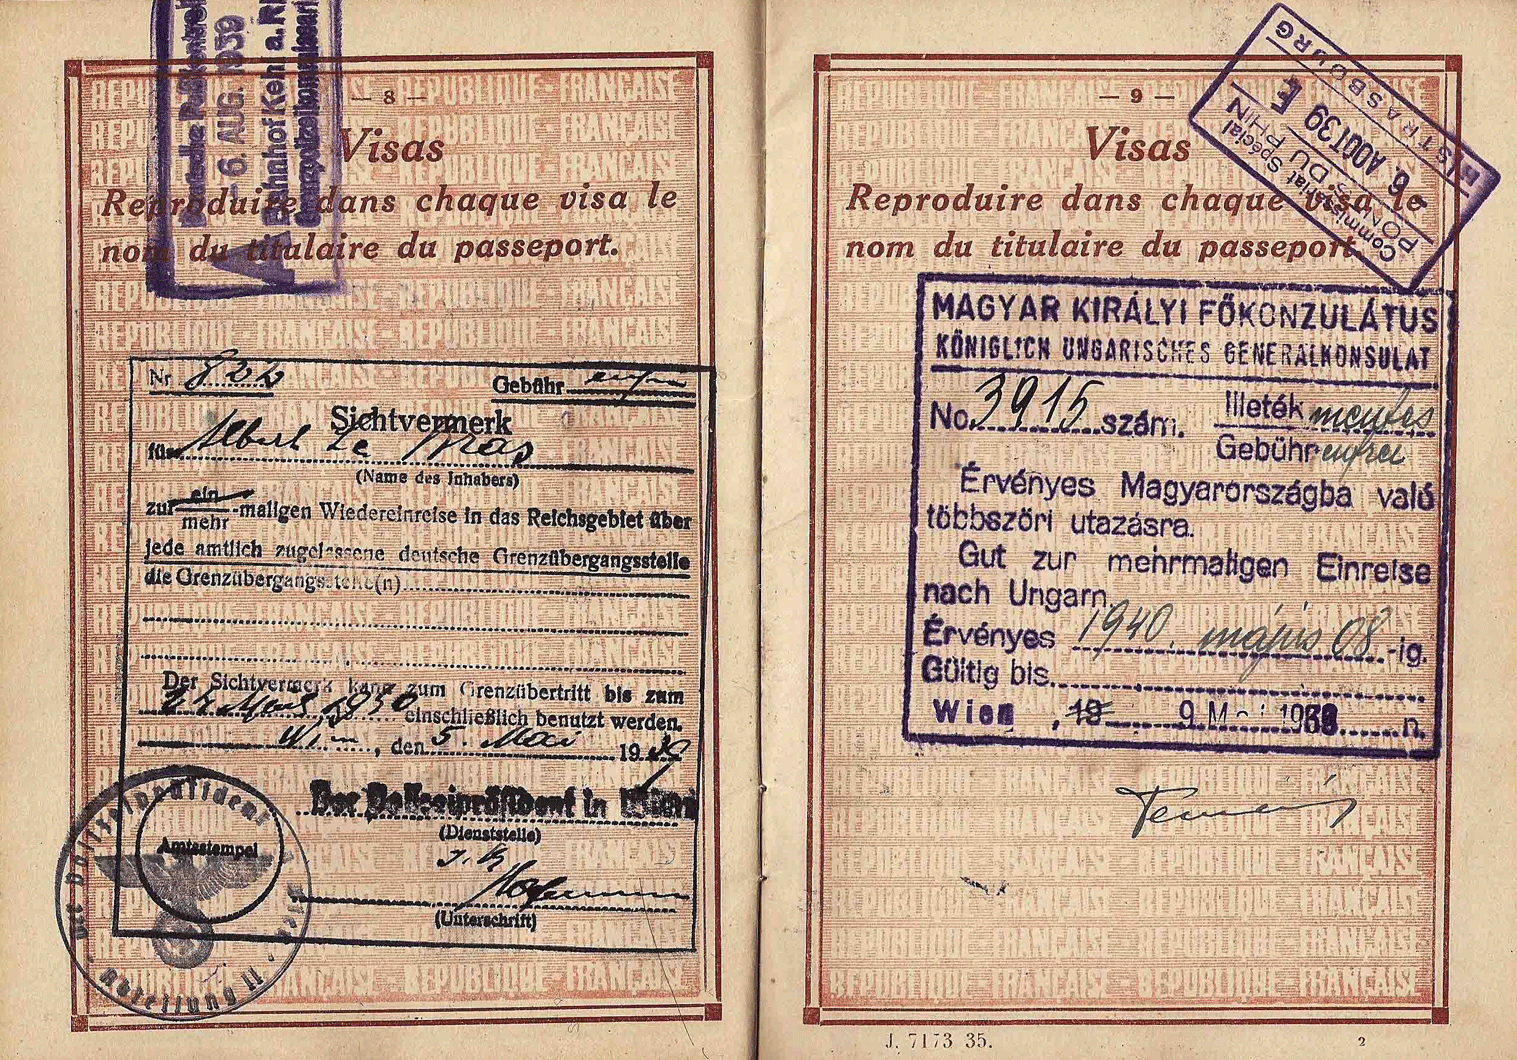 WW2 French passport